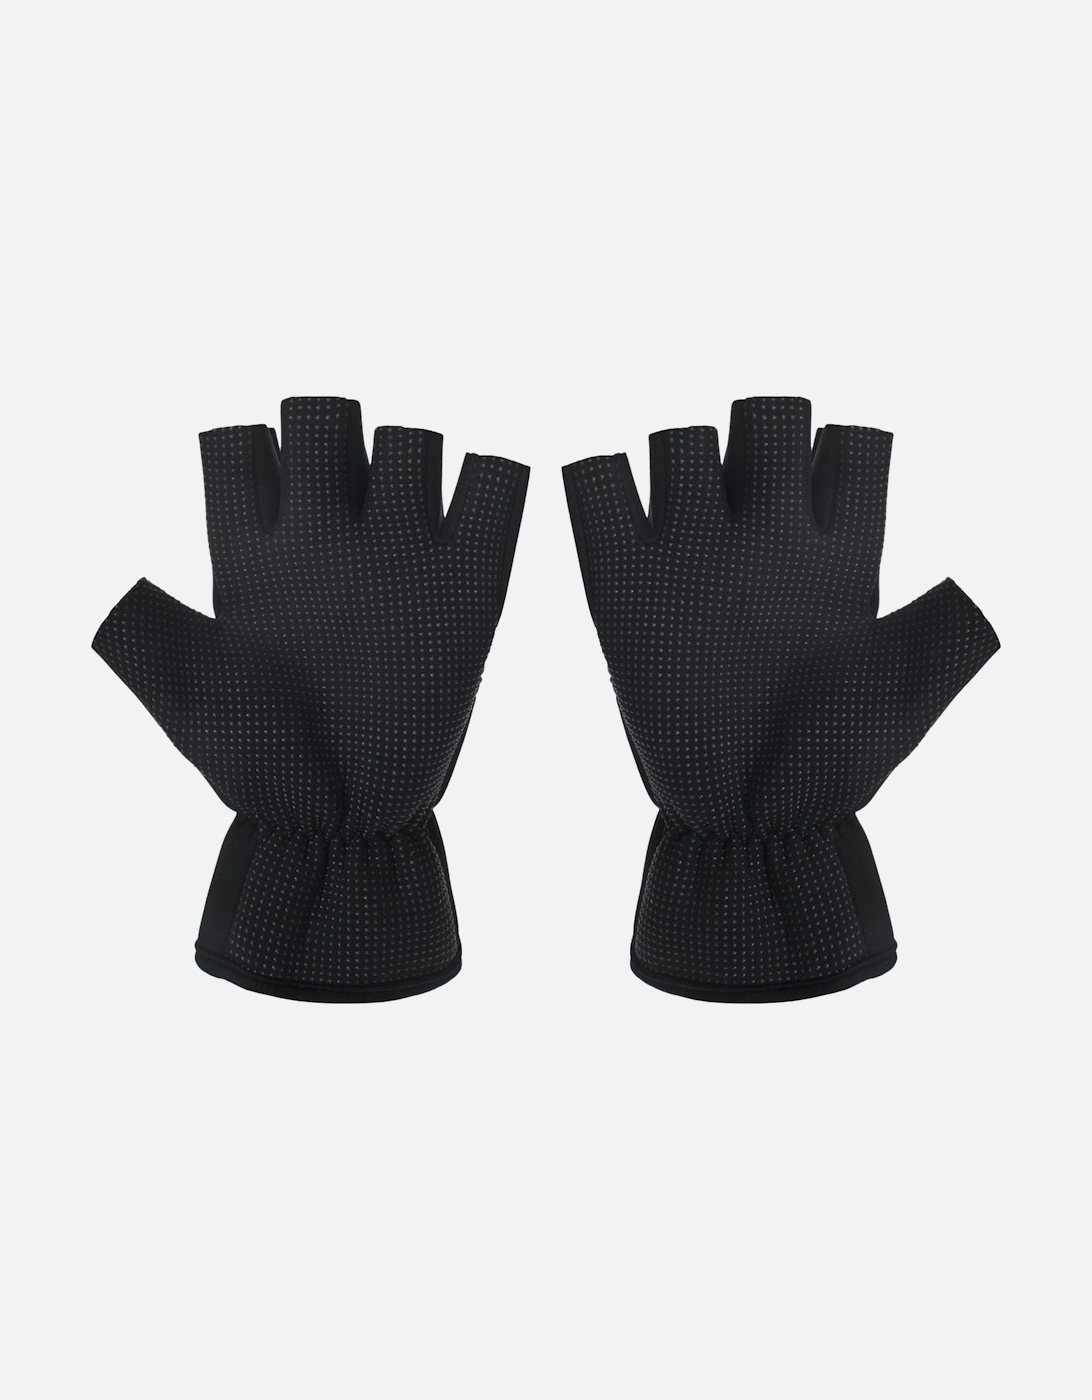 Adults Unisex Carradale Fingerless Gloves